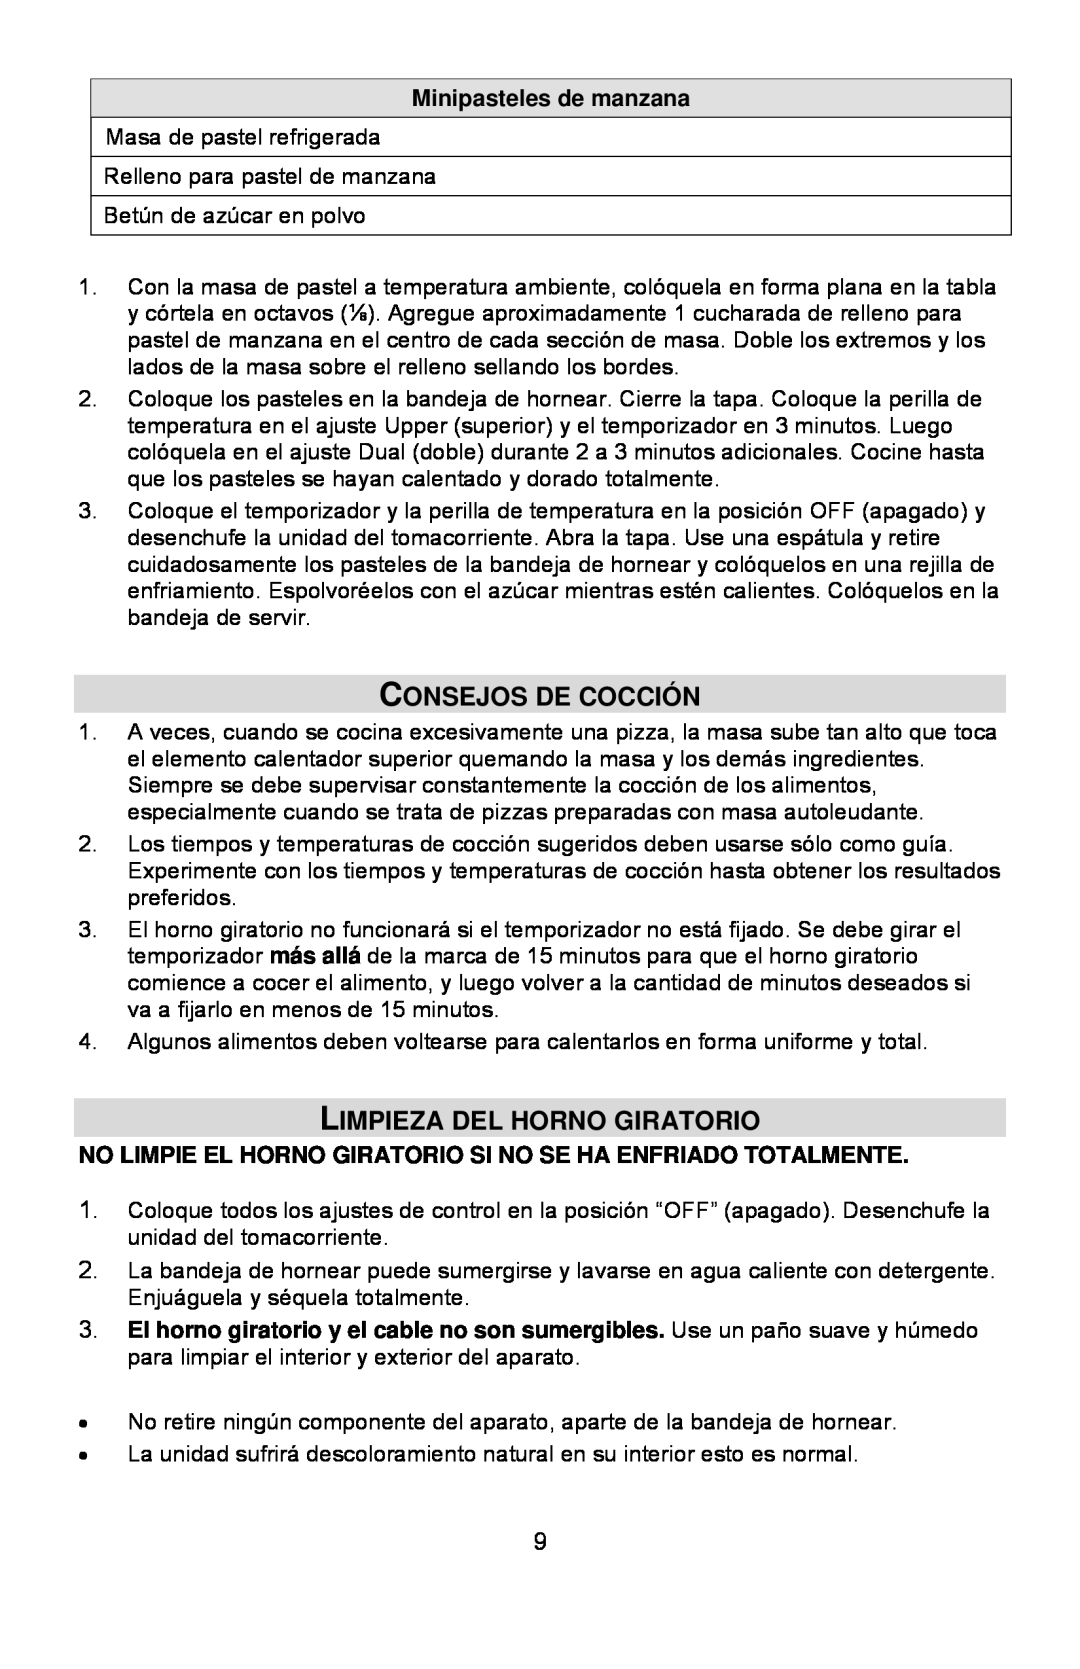 West Bend Rotary Oven instruction manual Consejos De Cocción, Limpieza Del Horno Giratorio 